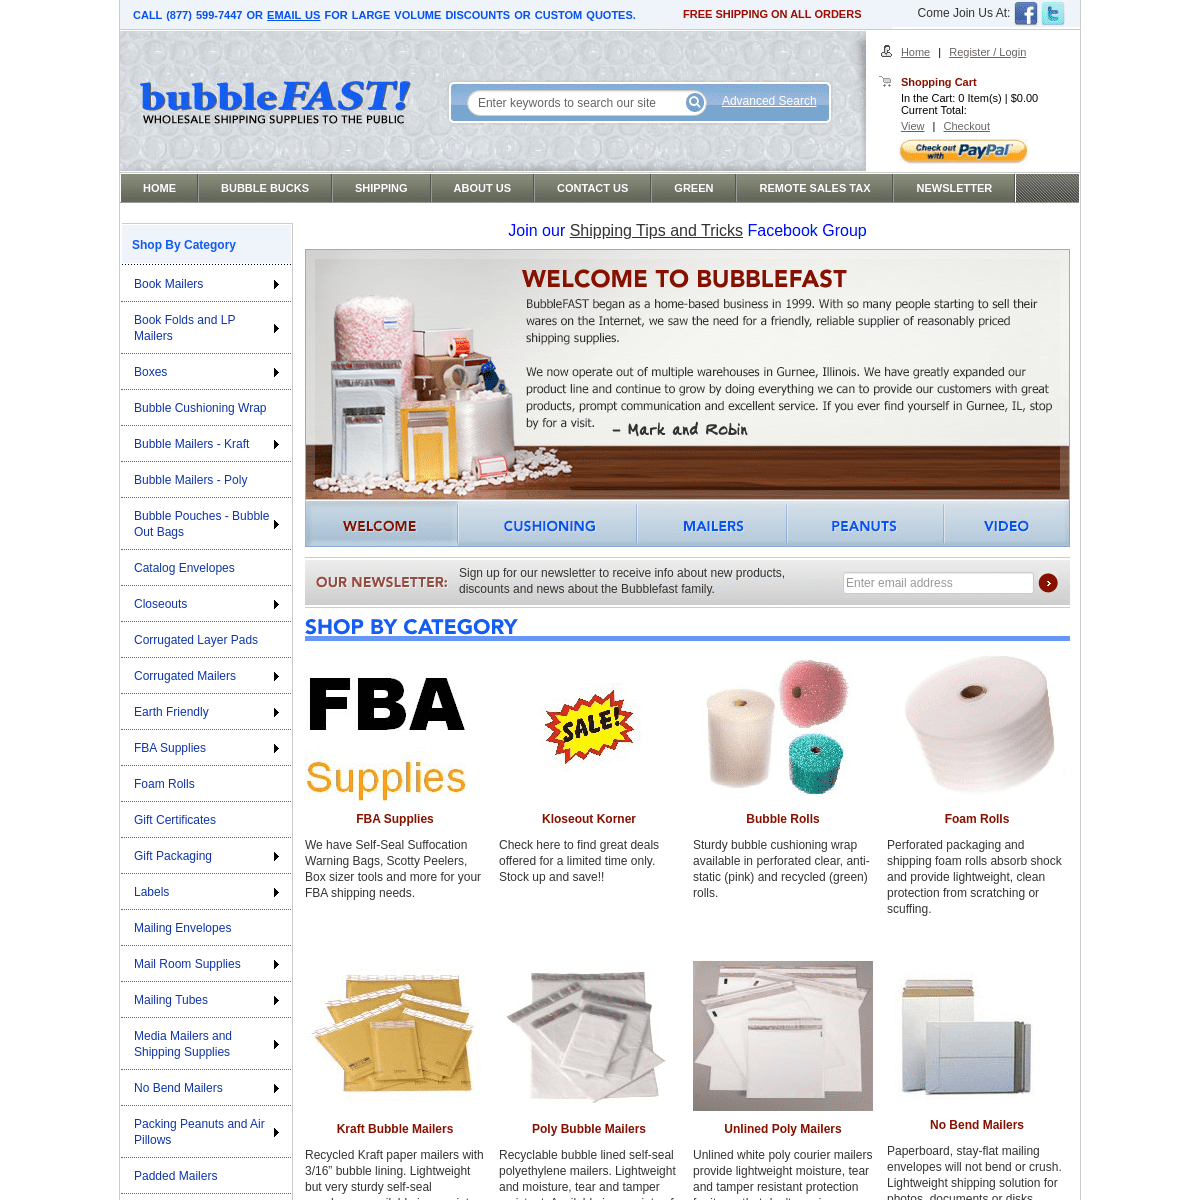 A complete backup of bubblefast.com